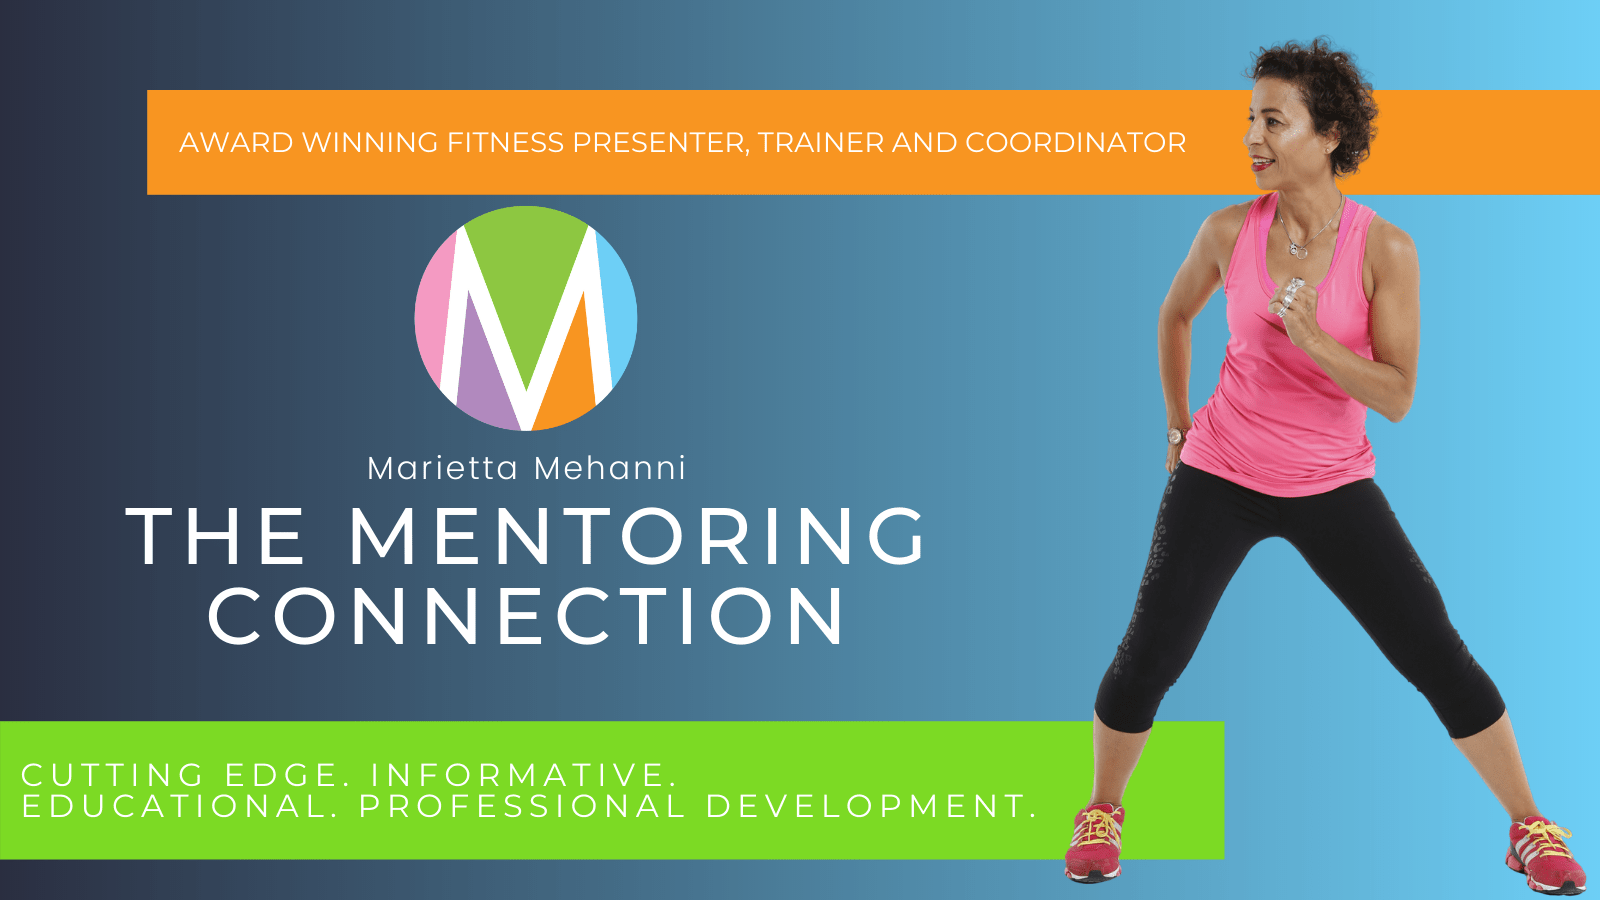 blog the mentoring connection marietta mehanni education professional development group fitness personal training informative fitness guru presenter